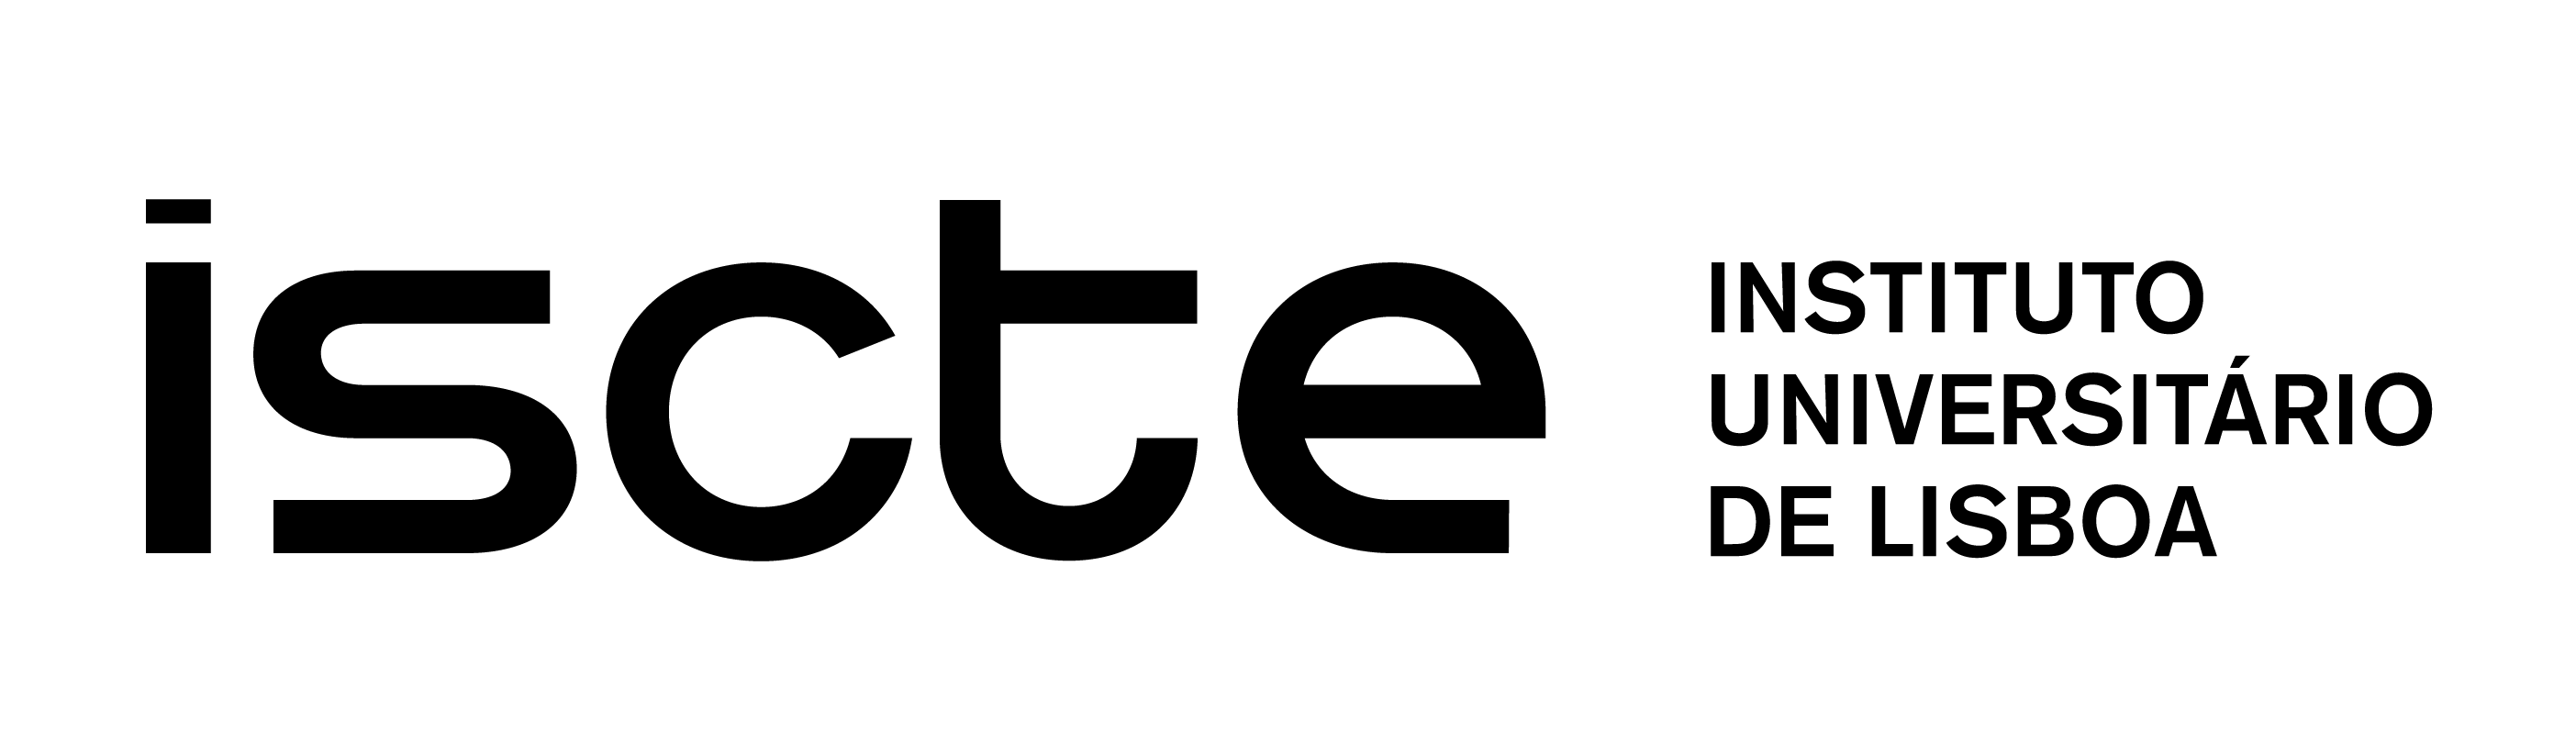 Logotipo do Iscte